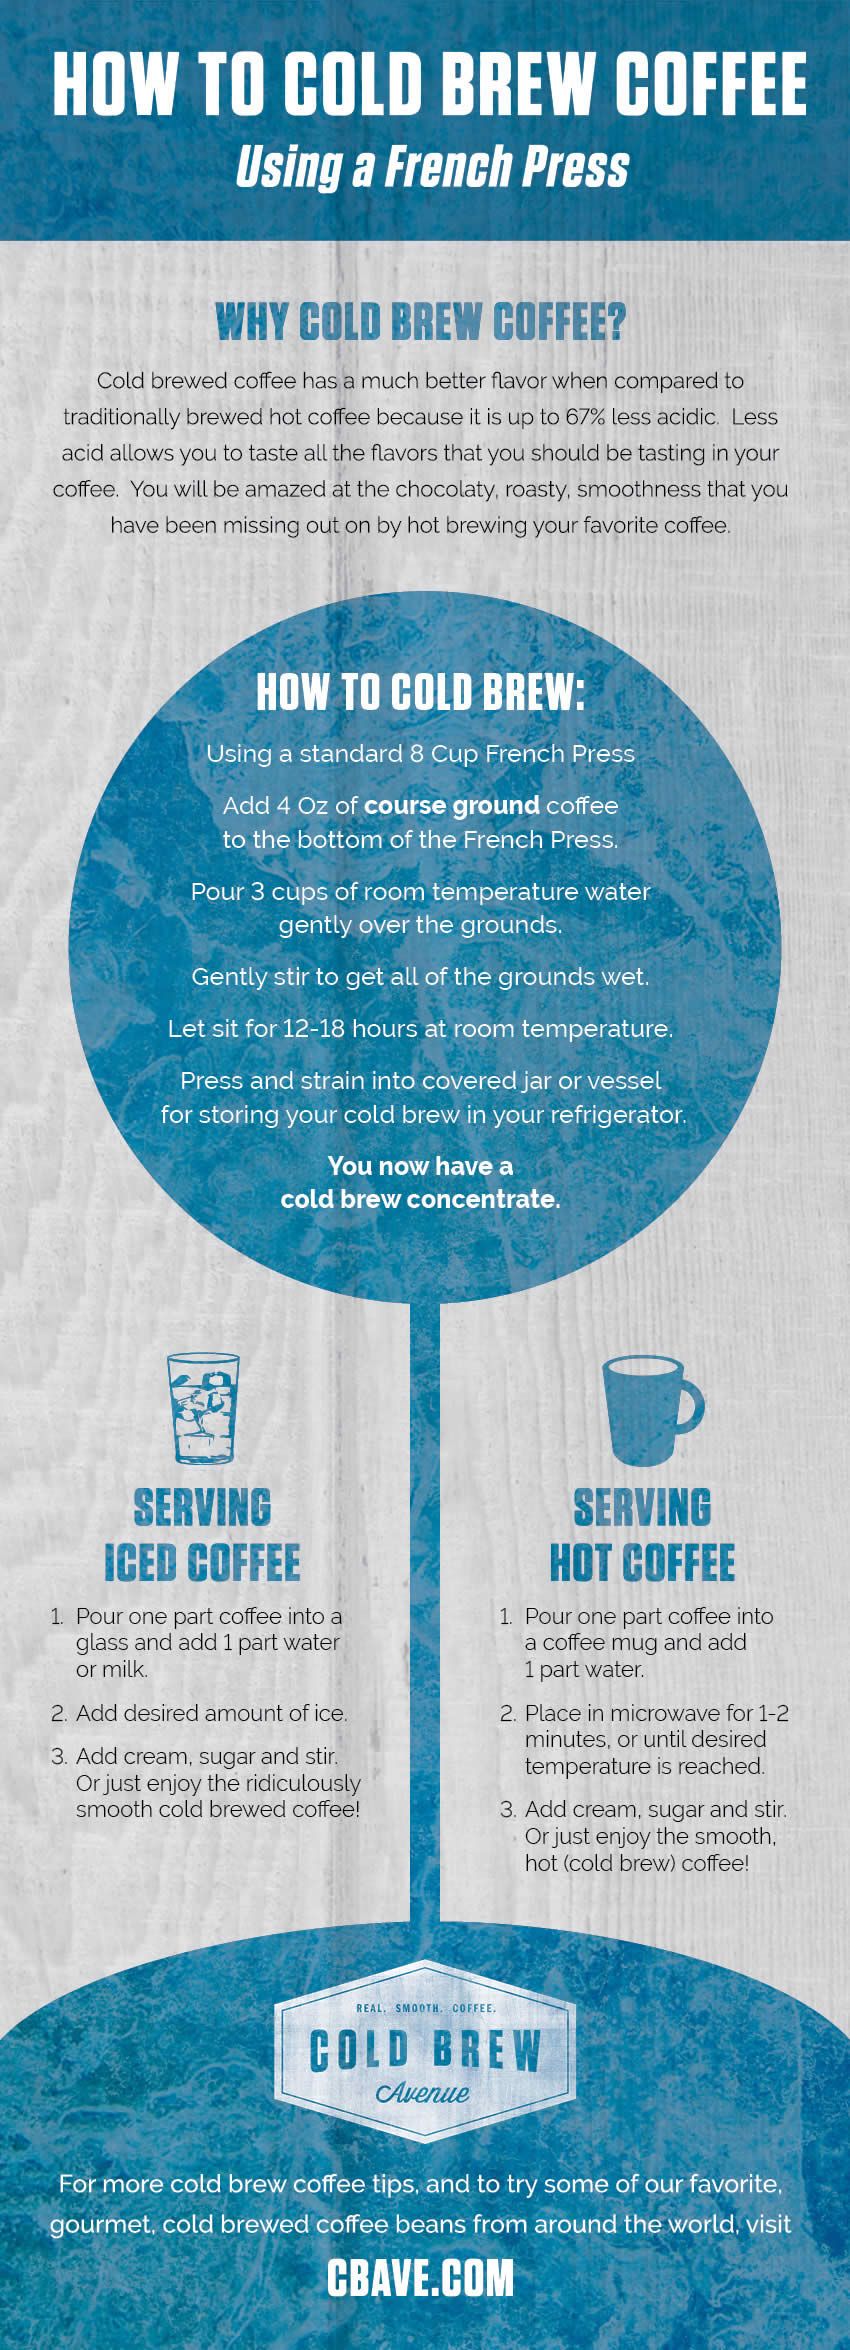 https://www.coldbrewavenue.com/media/uploads_ckeditor/infographics/how-to-cold-brew-coffee-using-french-press.jpg